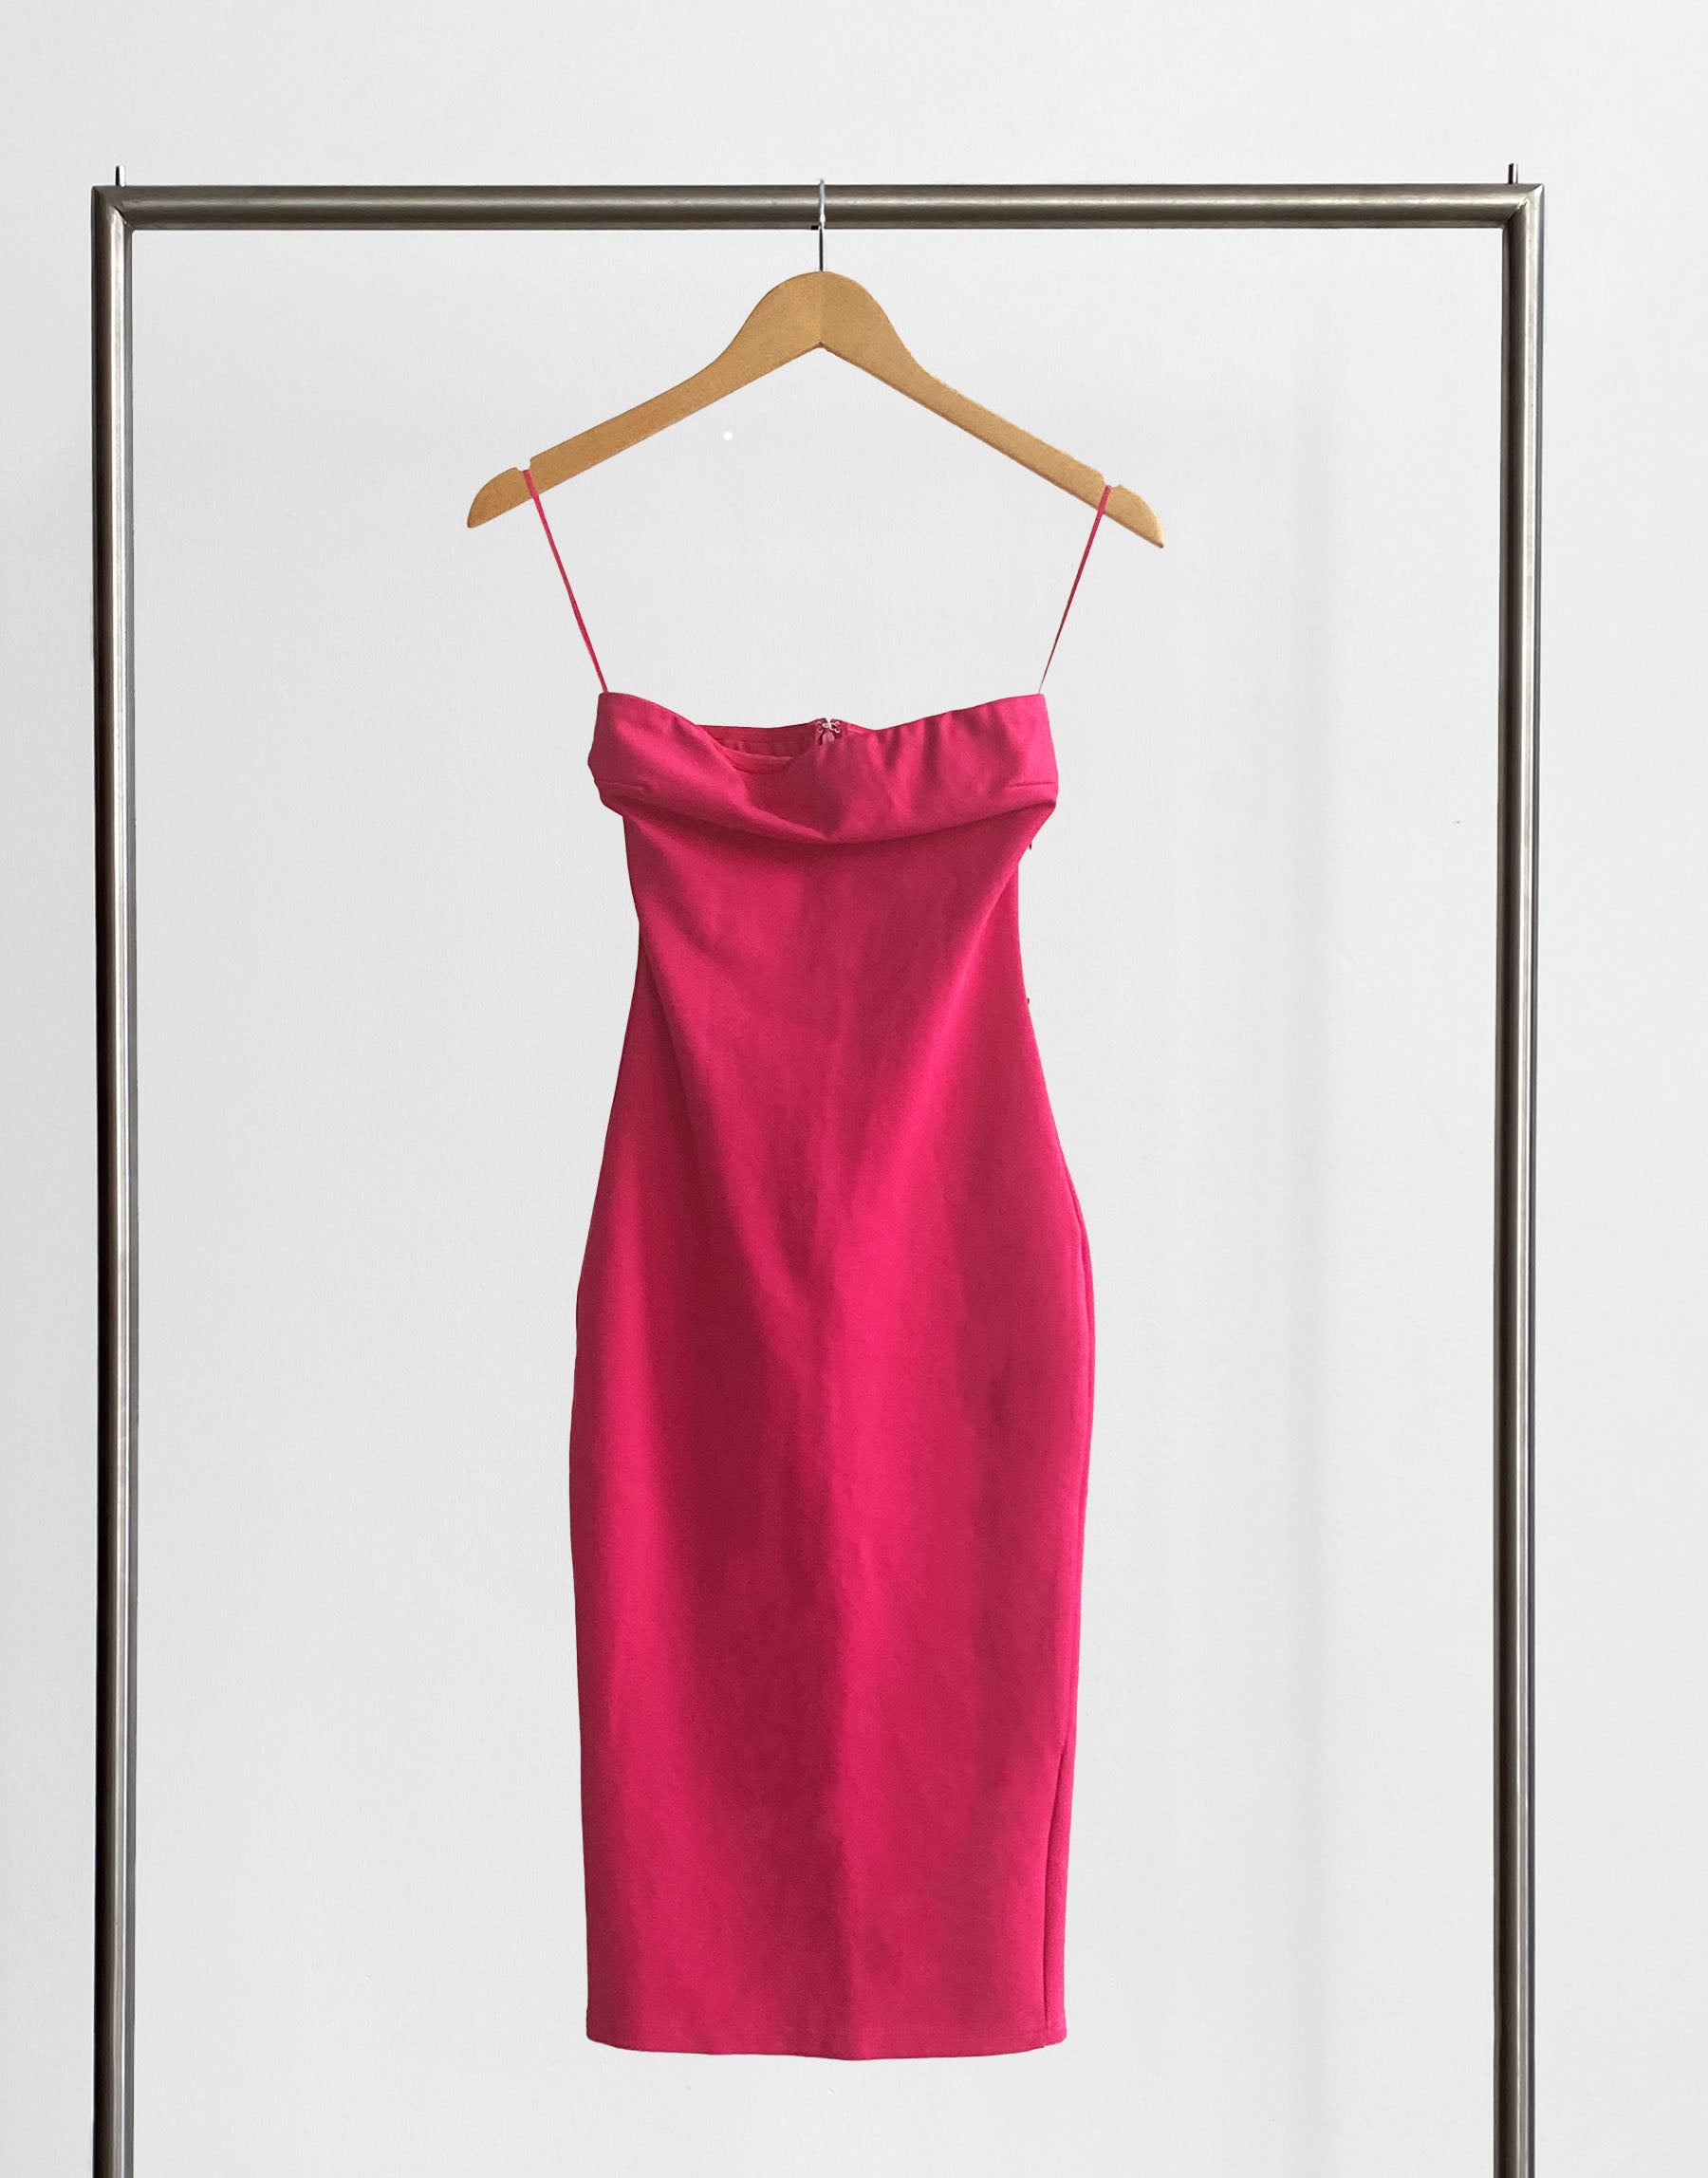 Hot Pink Strapless Bodycon Dress